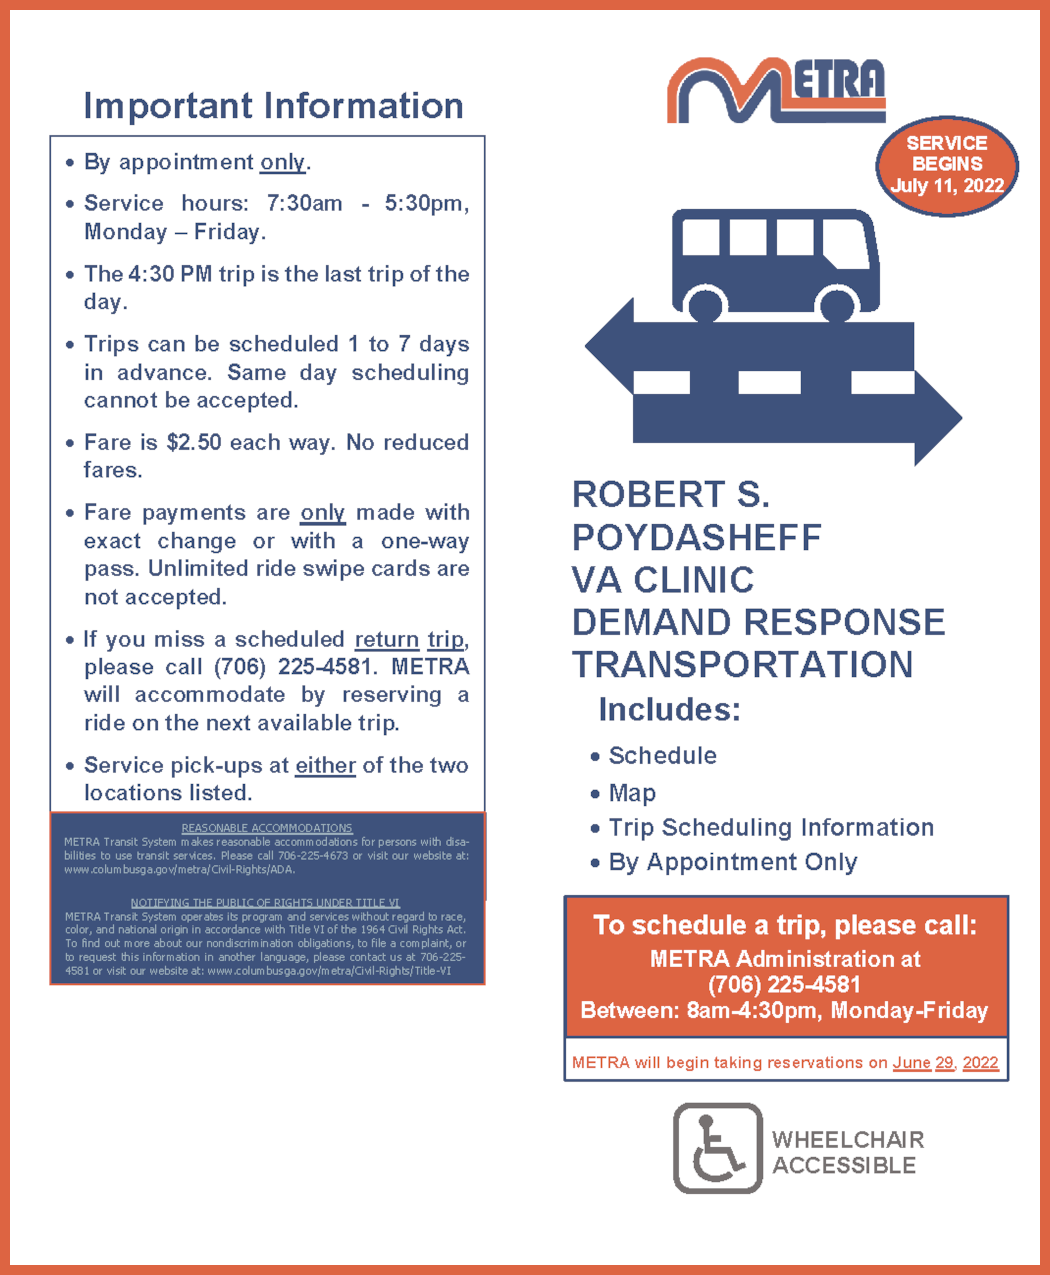 METRA’s Robert S. Poydasheff VA Clinic Demand Response Transportation press release